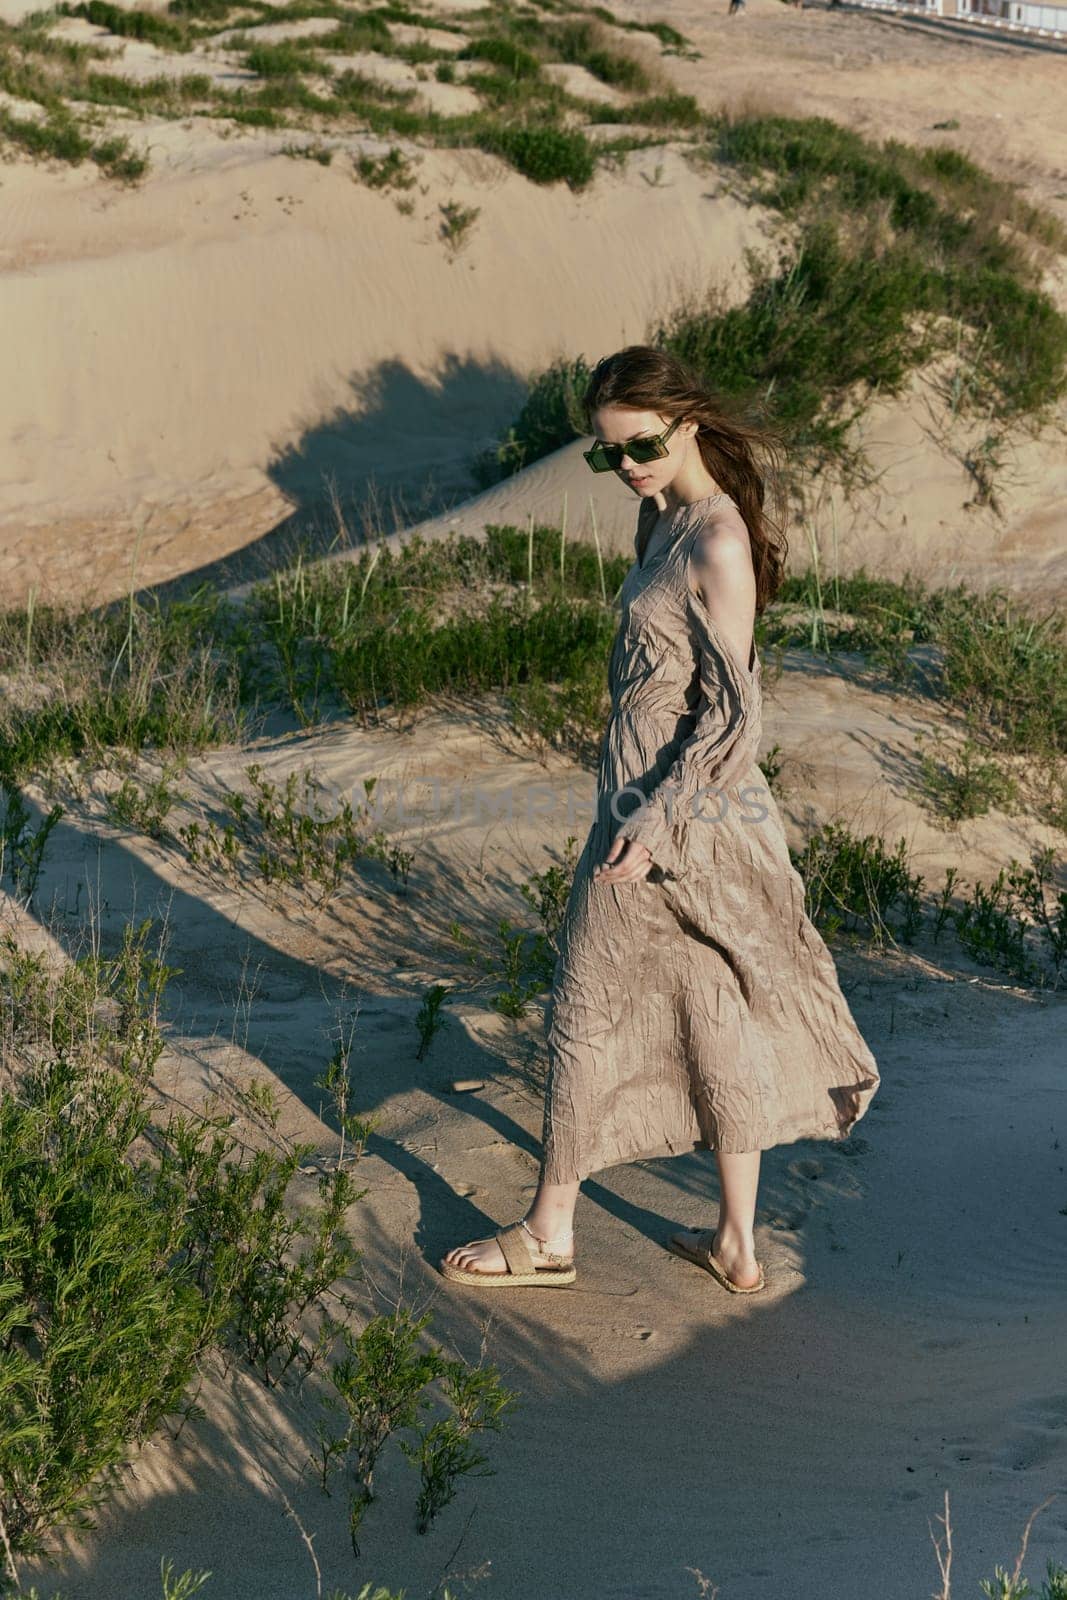 a slender woman in a long dress walks along a wild beach alone by Vichizh